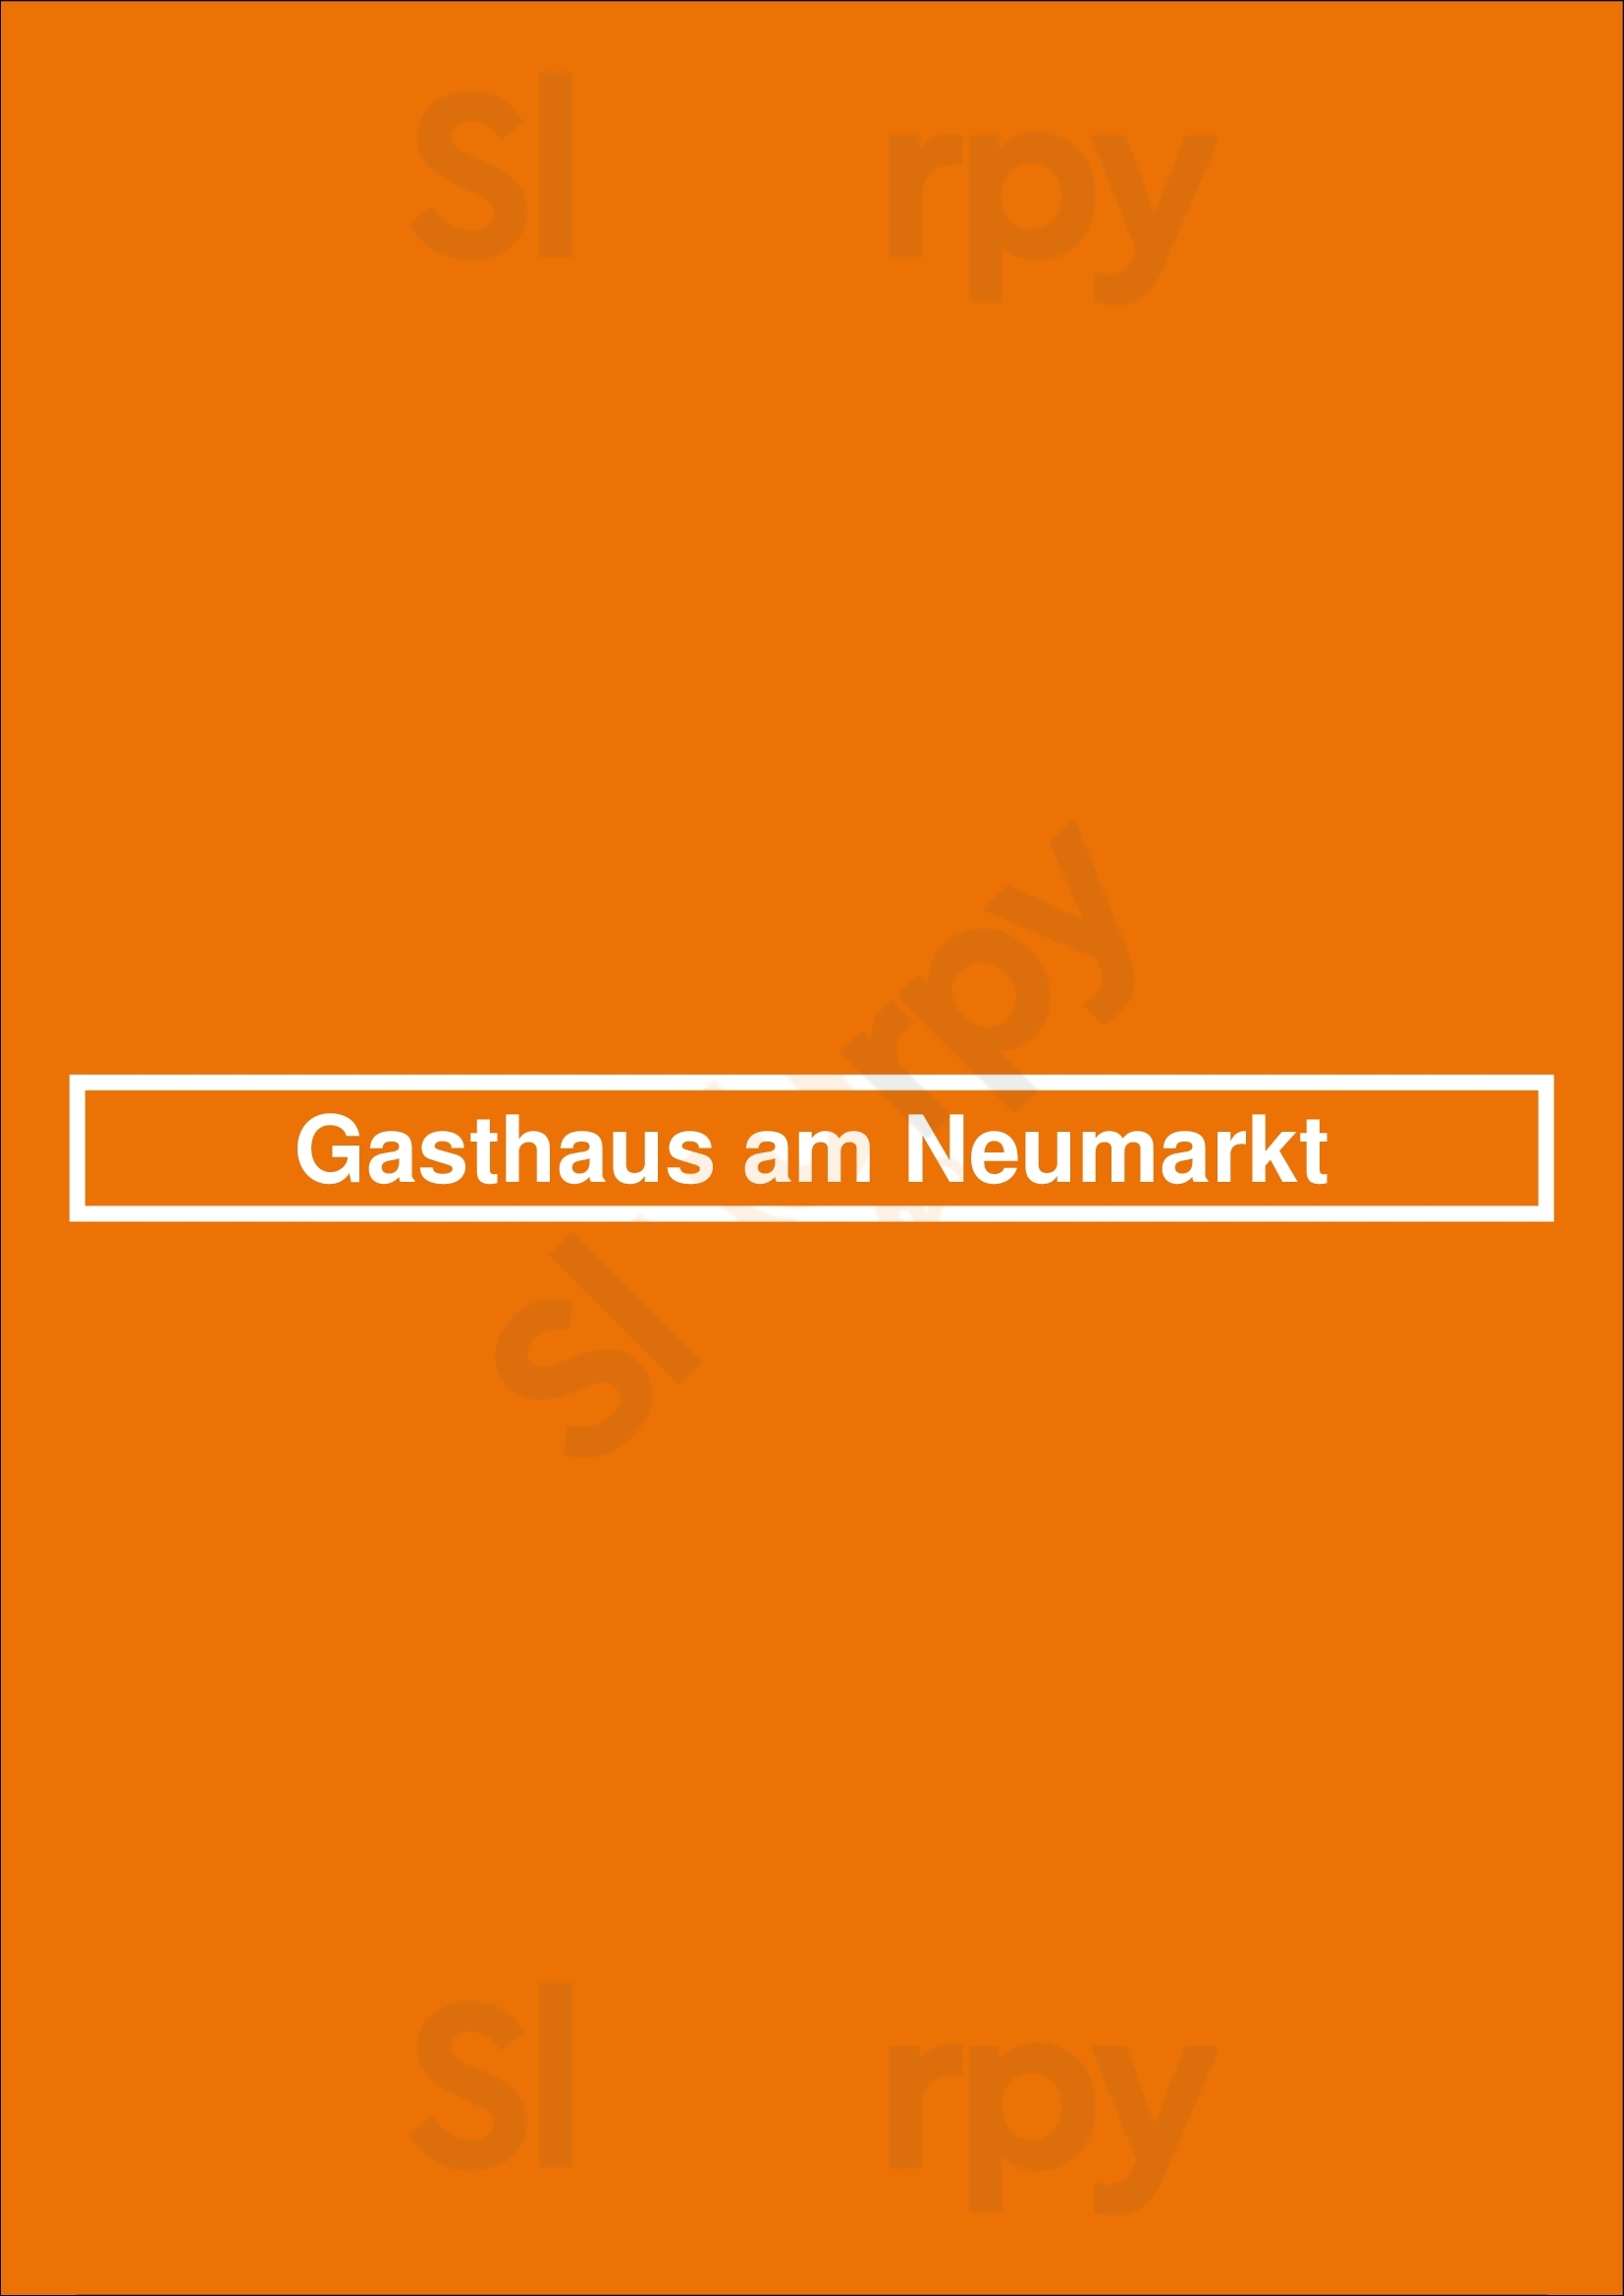 Gasthaus Am Neumarkt Dresden Menu - 1